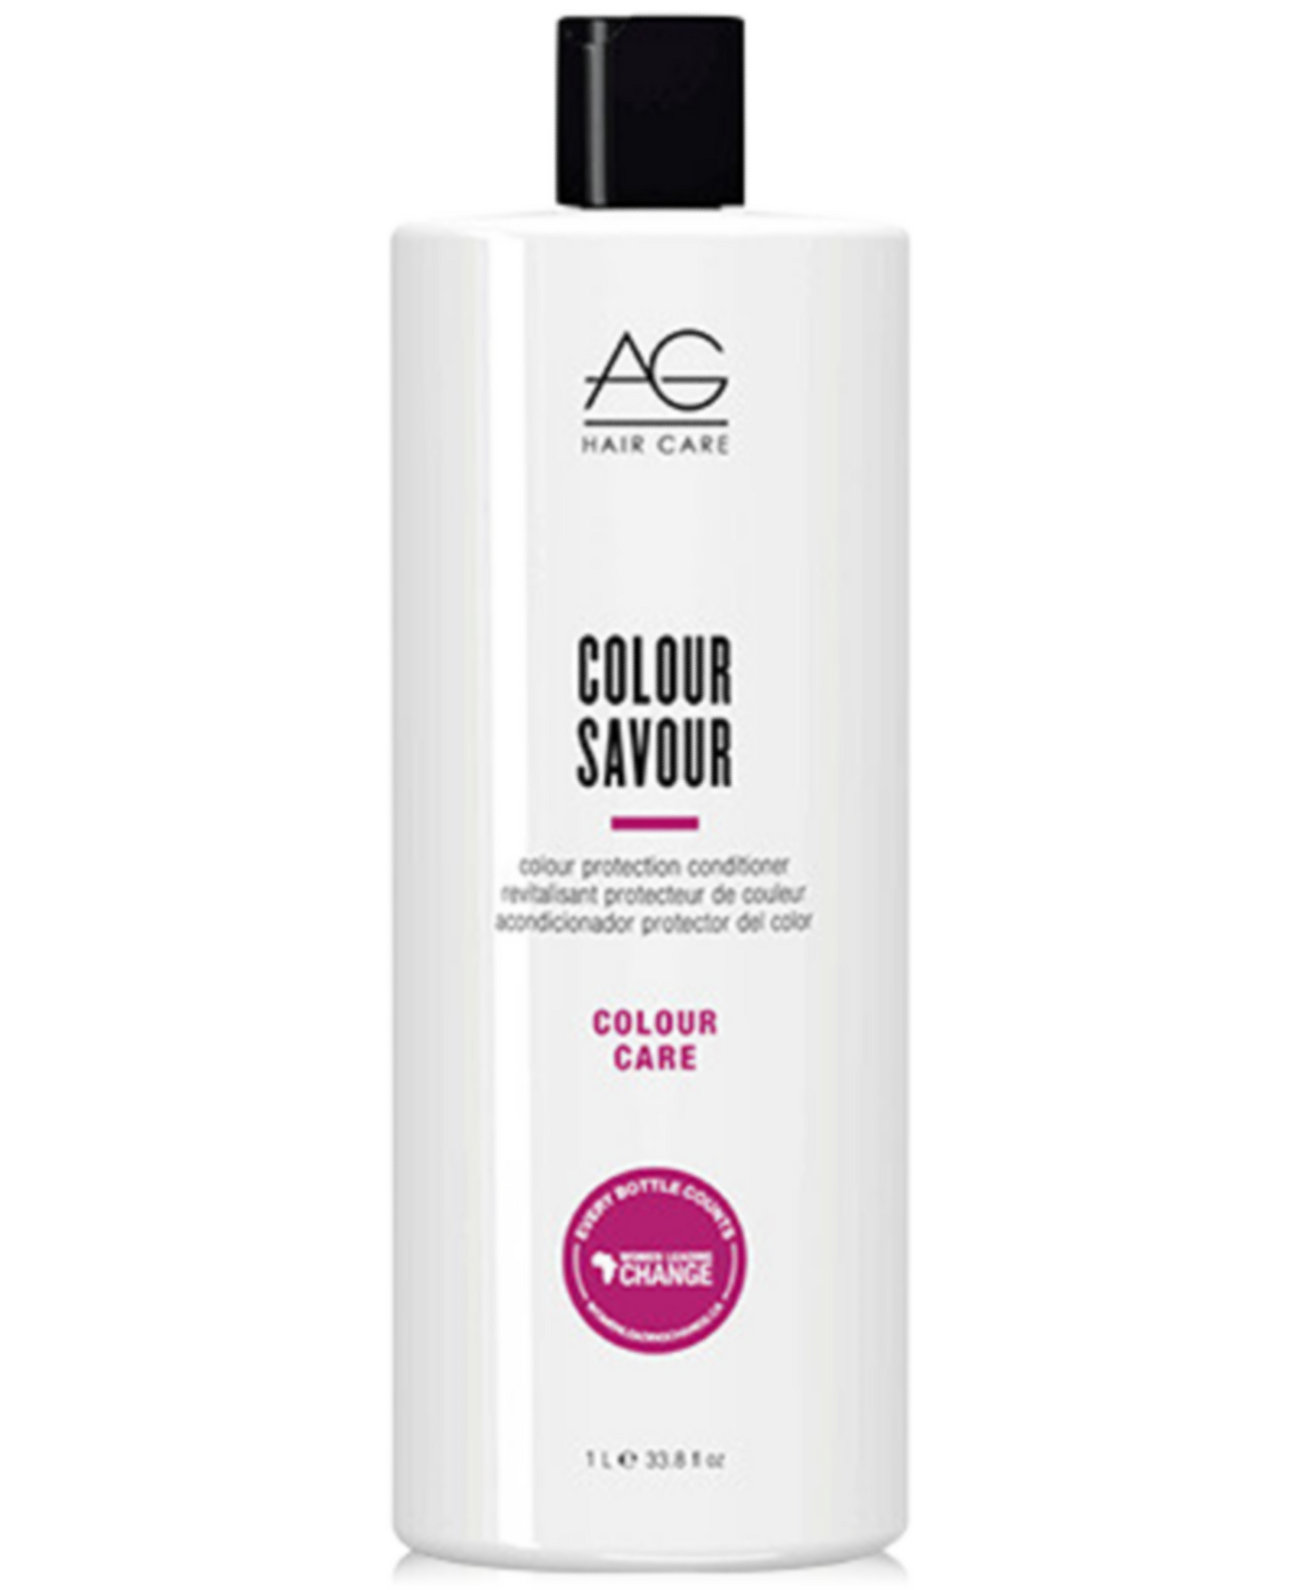 Color Care Color Savor Conditioner, 33,8 унции, от PUREBEAUTY Salon & Spa AG Hair